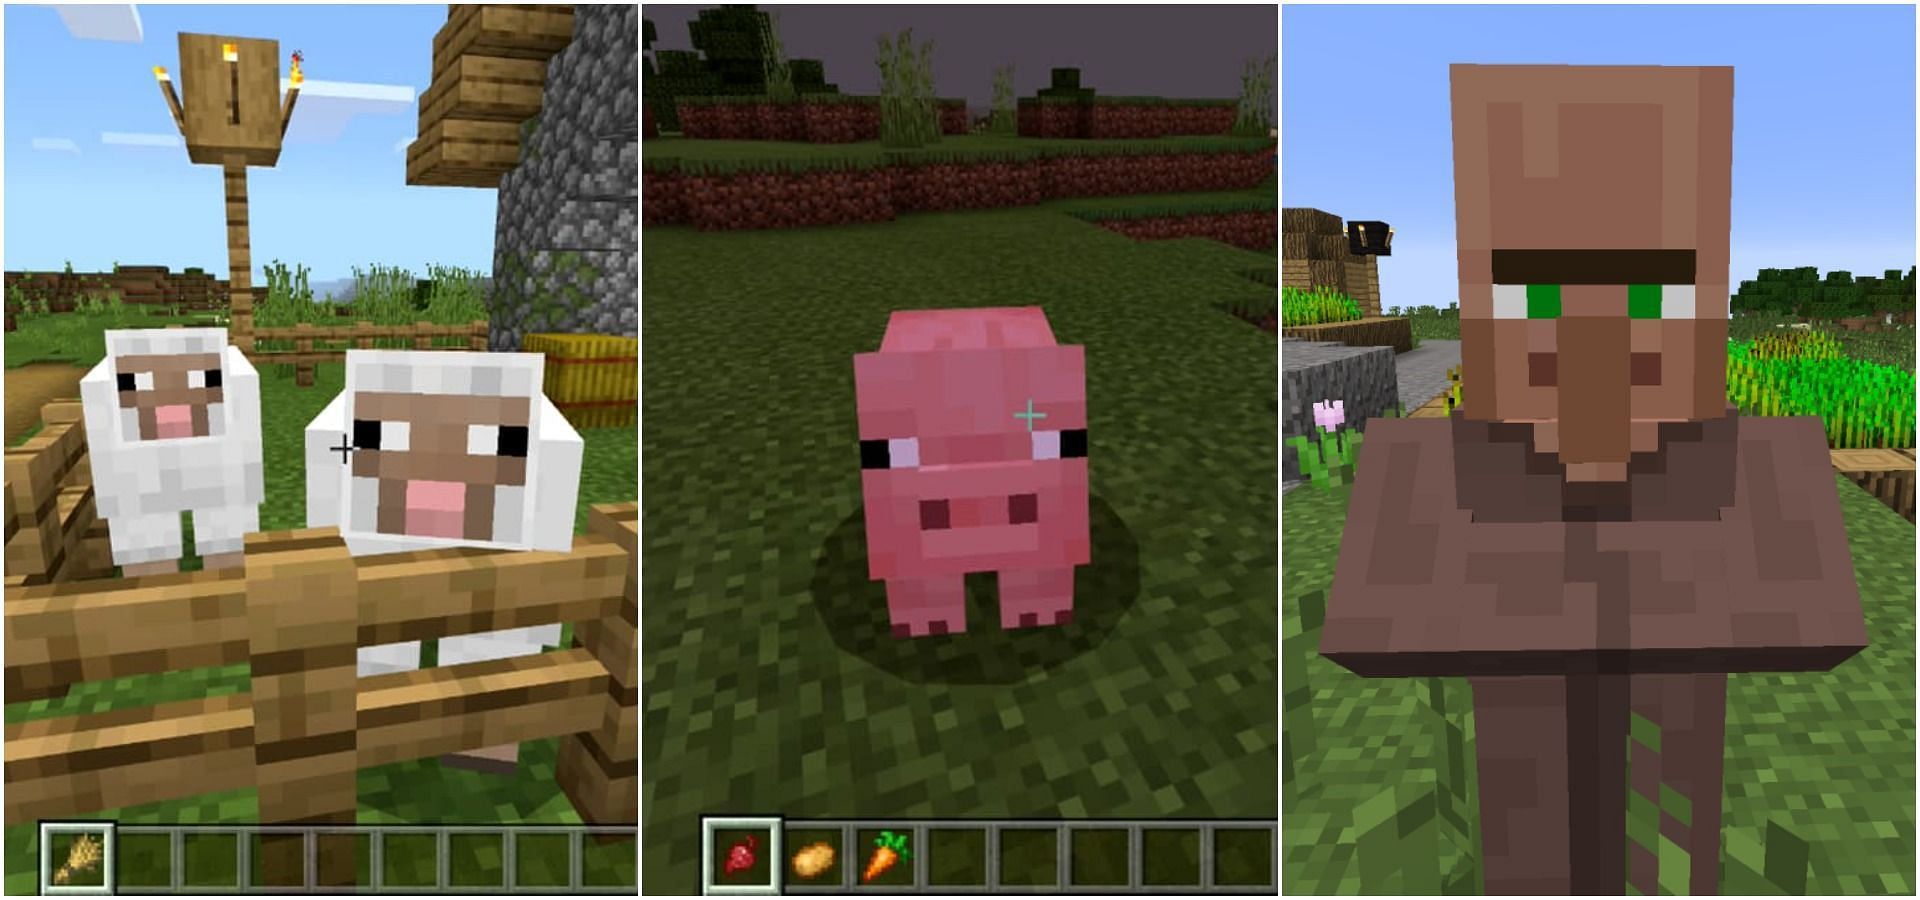 Sheep, Pigs, Villager (Image via Minecraft)